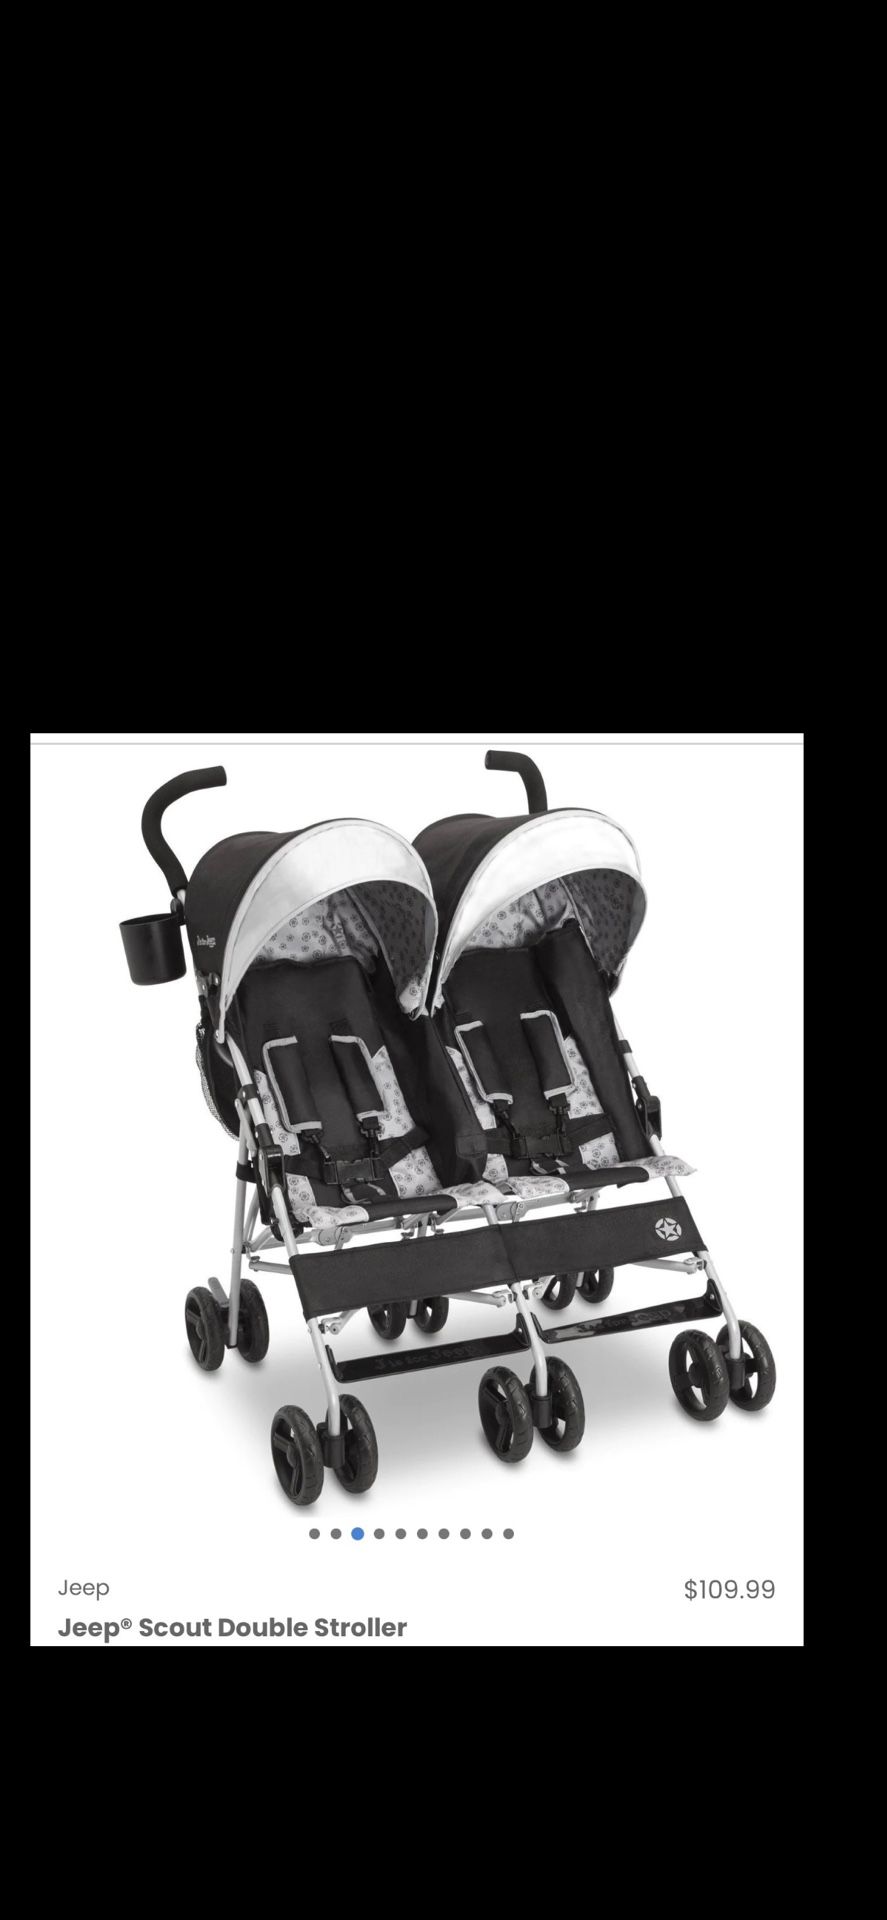 Stroller/ Jeep Scout Double Stroller/ Jeep/ Double Stroller/ Side By Side/ Kids/ Baby/ Twins/ Travel/ Walking/ New